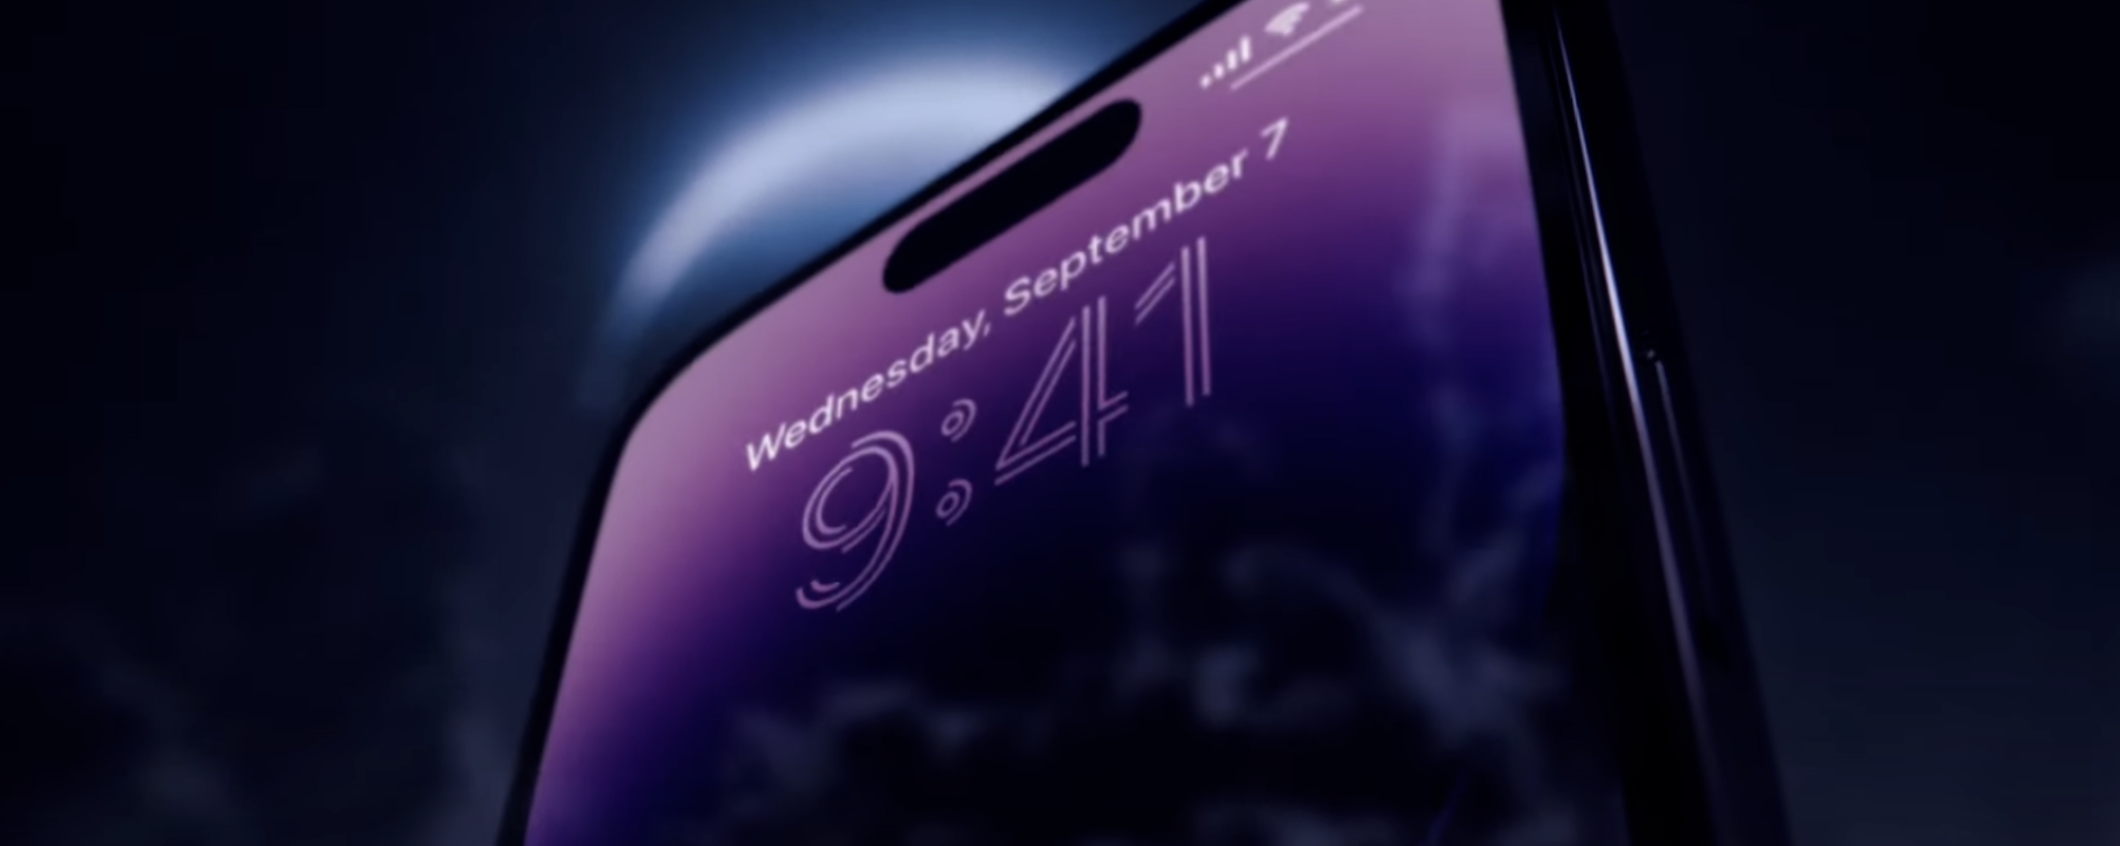 iPhone 14 Pro: nuove opzioni per l'Always-On Display